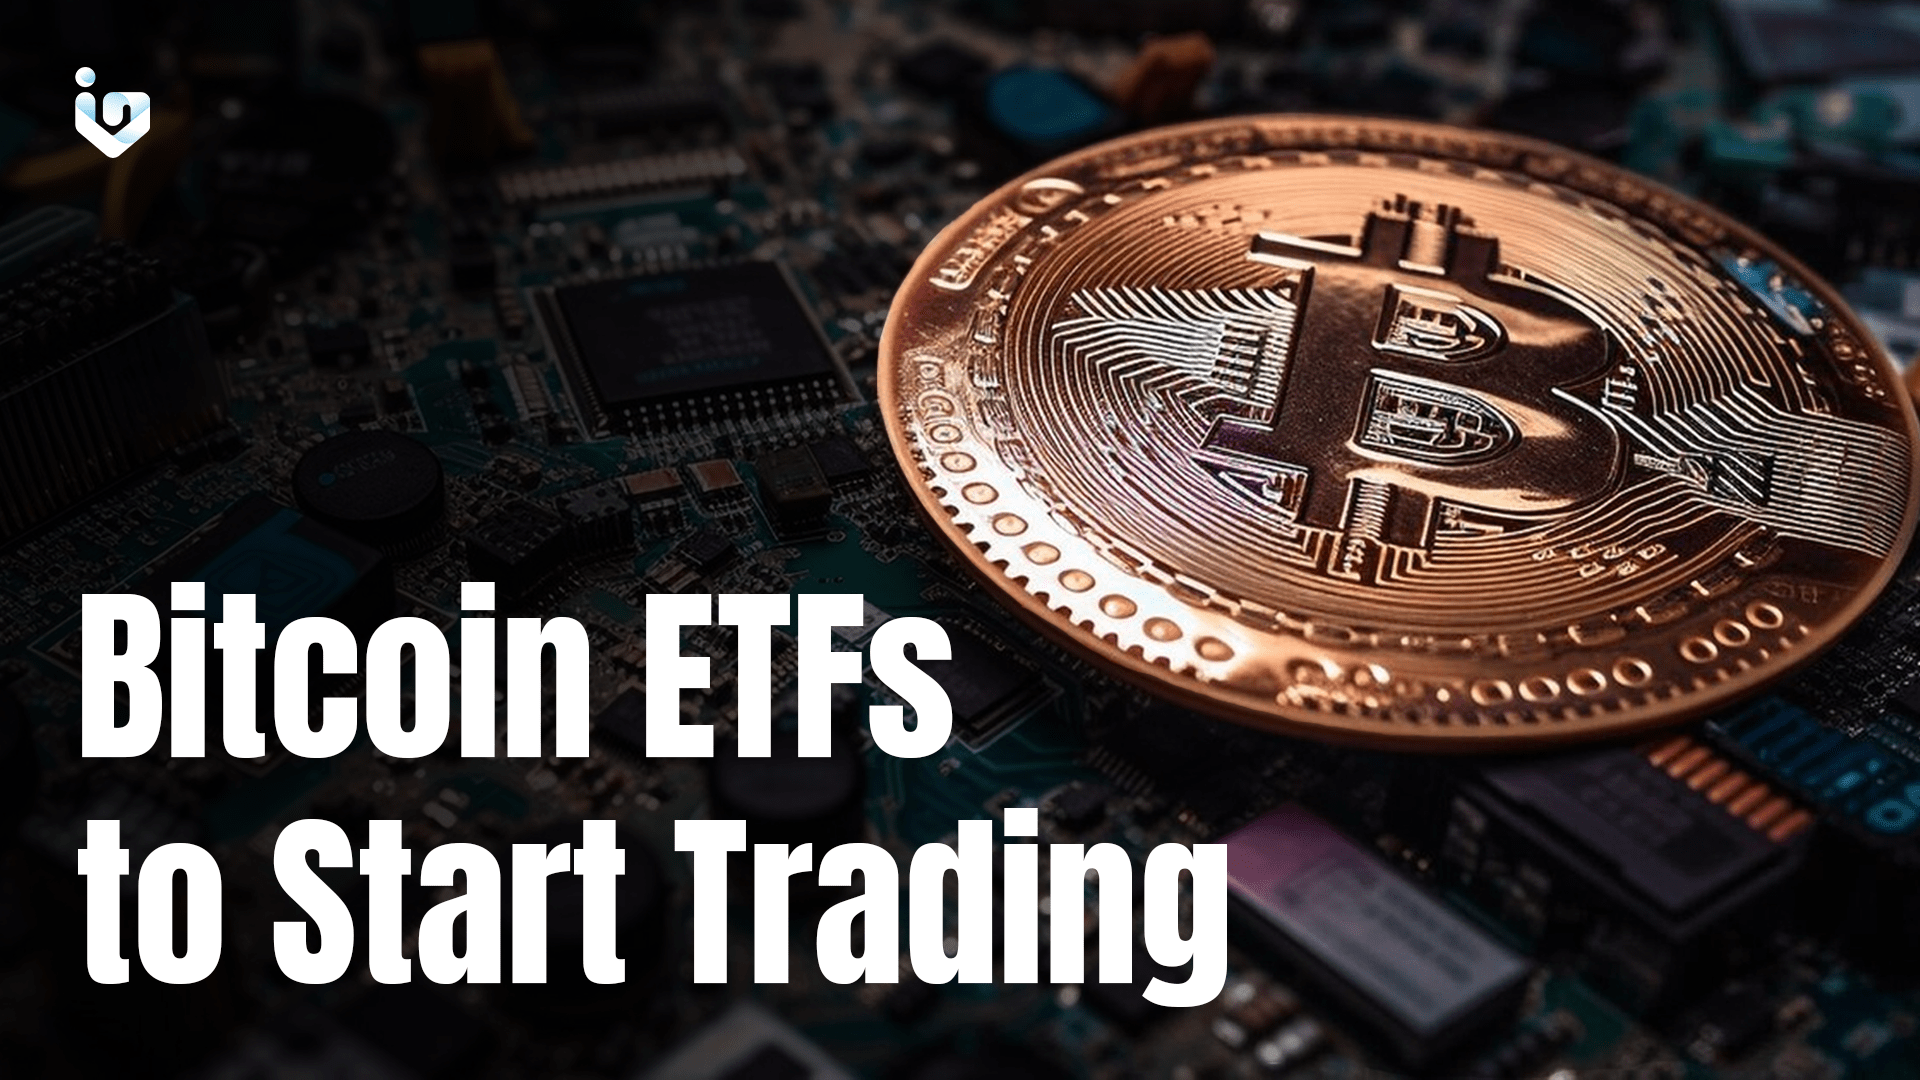 Bitcoin ETFs to Start Trading